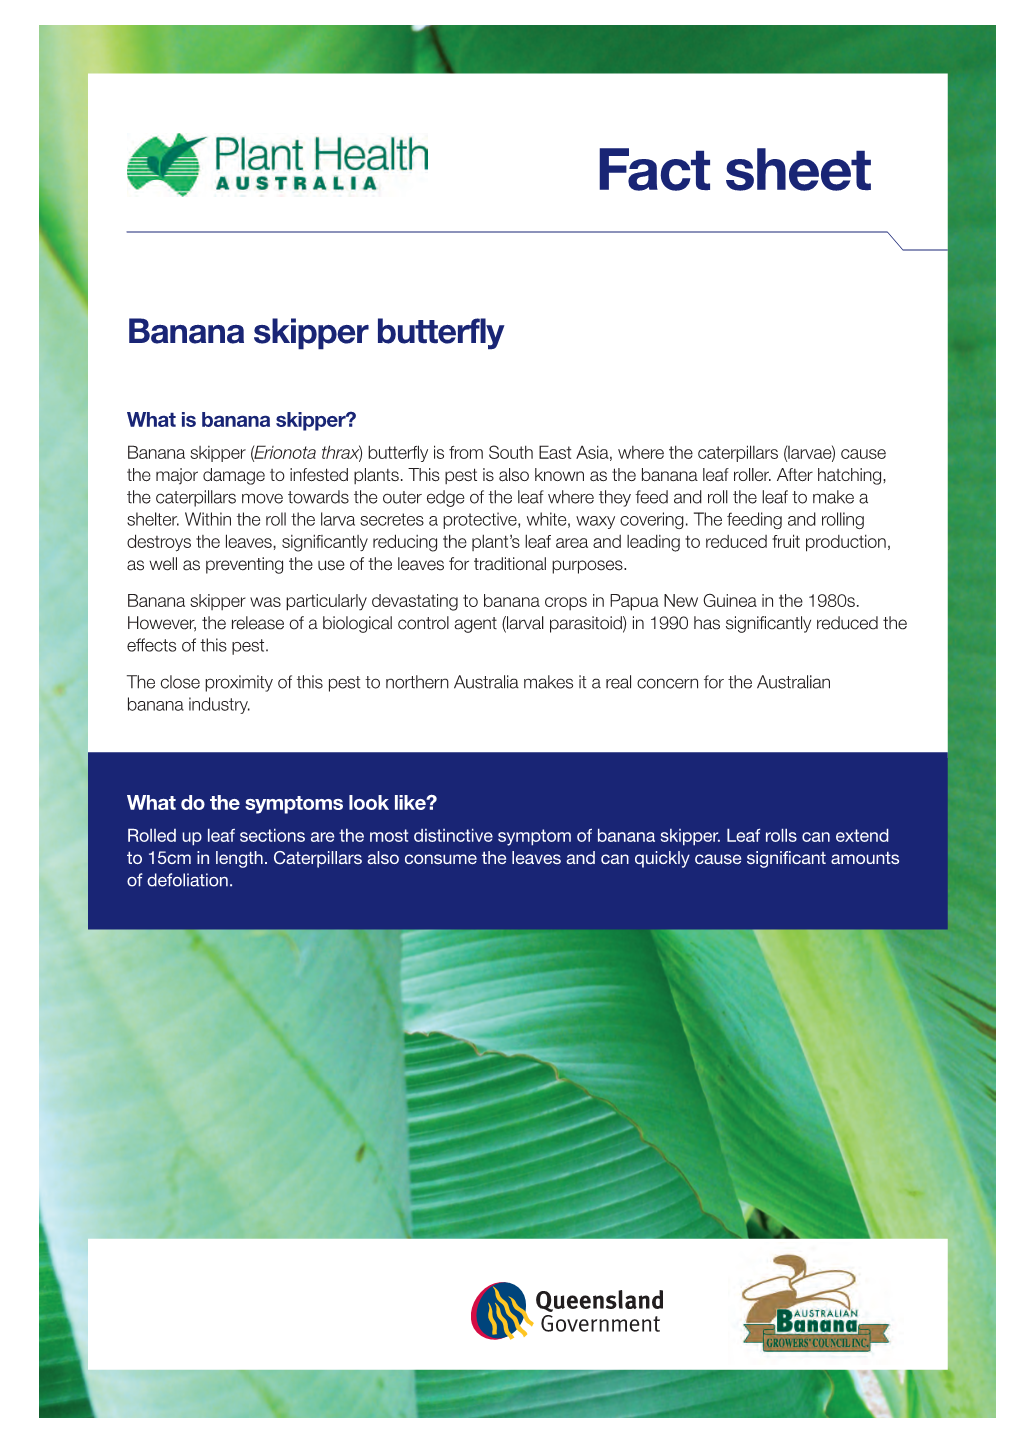 Banana Skipper Butterfly